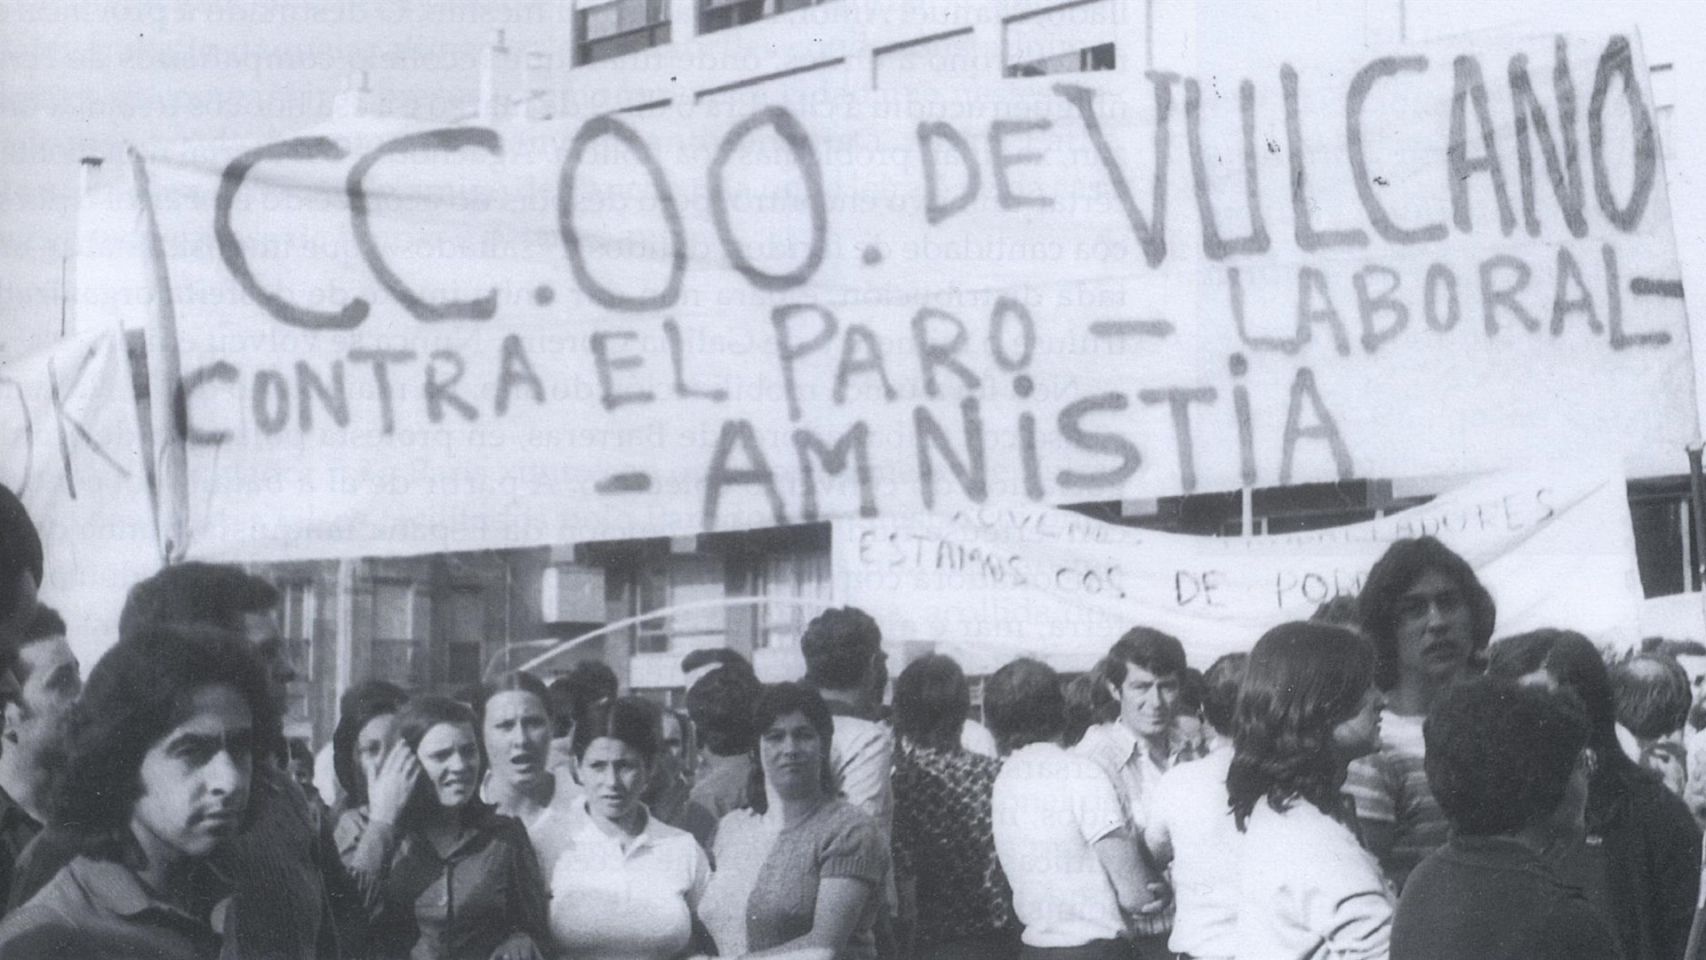 Imagen publicada en el libro 'A forza da Palabra', editado por la unión comarcal de CC.OO.-Vigo.